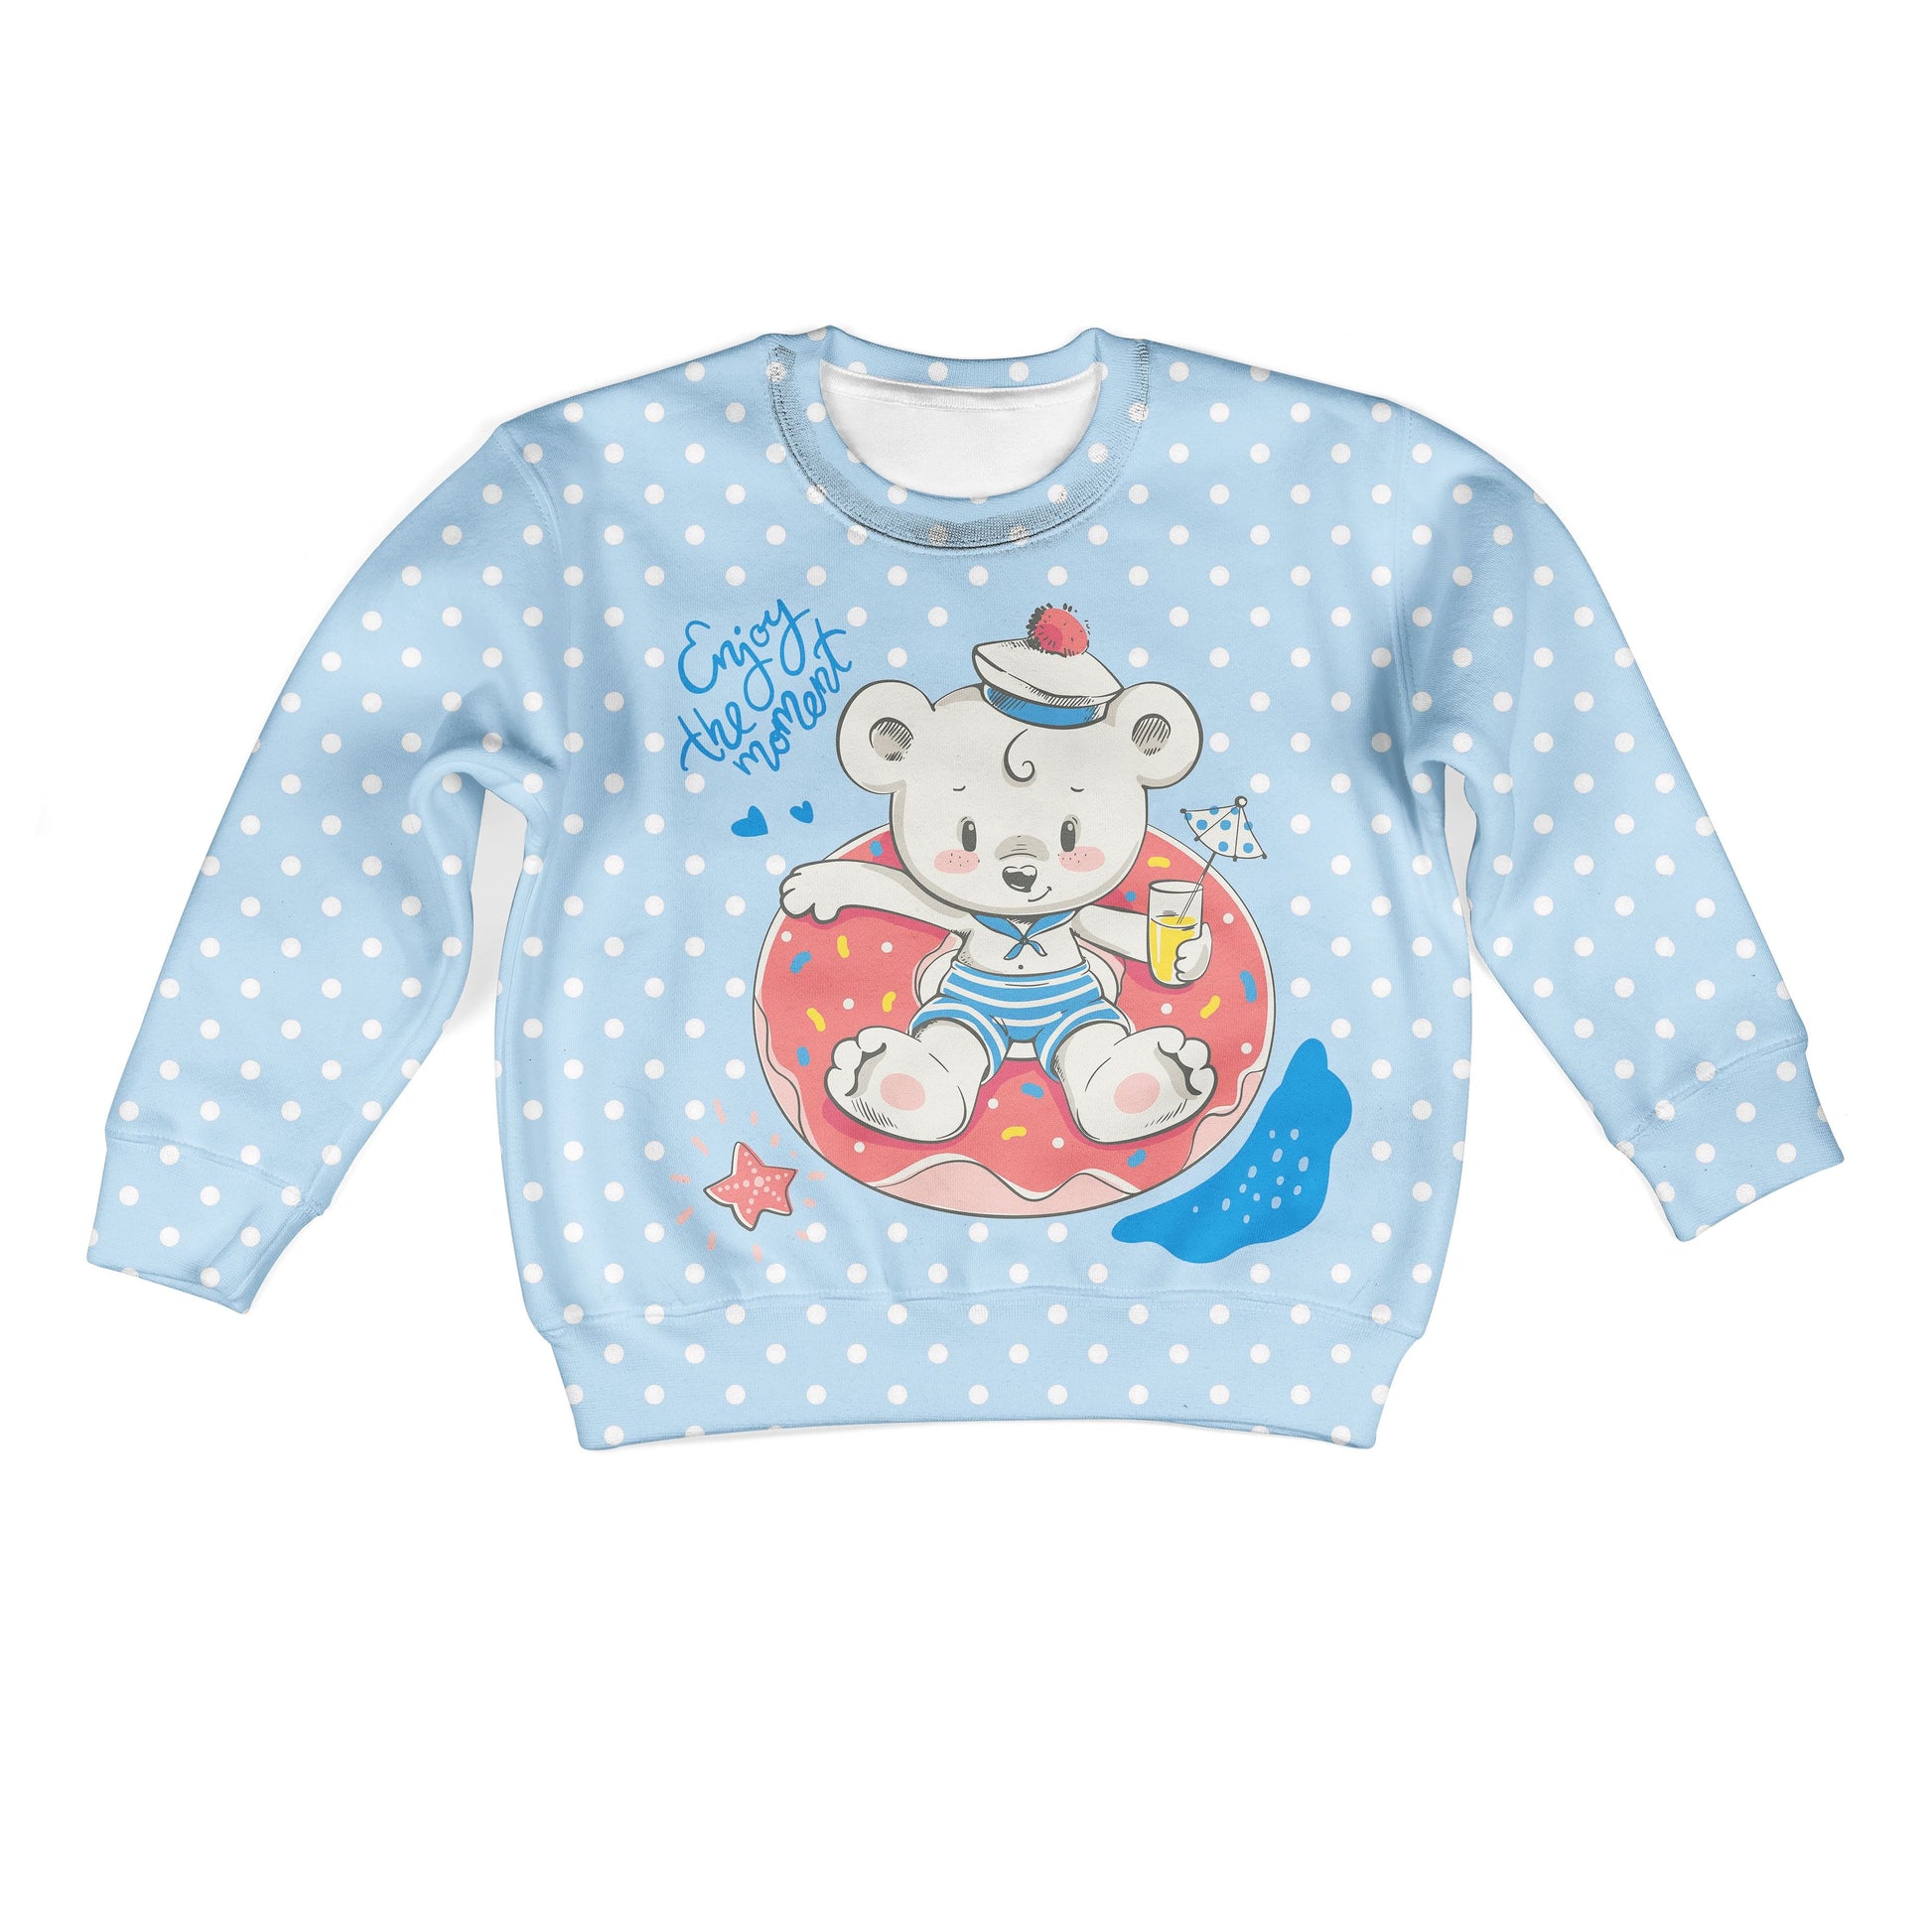 Bear enjoys the moment Kid Custom Hoodies T-shirt Apparel HD-PET110271K kid 3D apparel Kid Sweatshirt S/6-8 